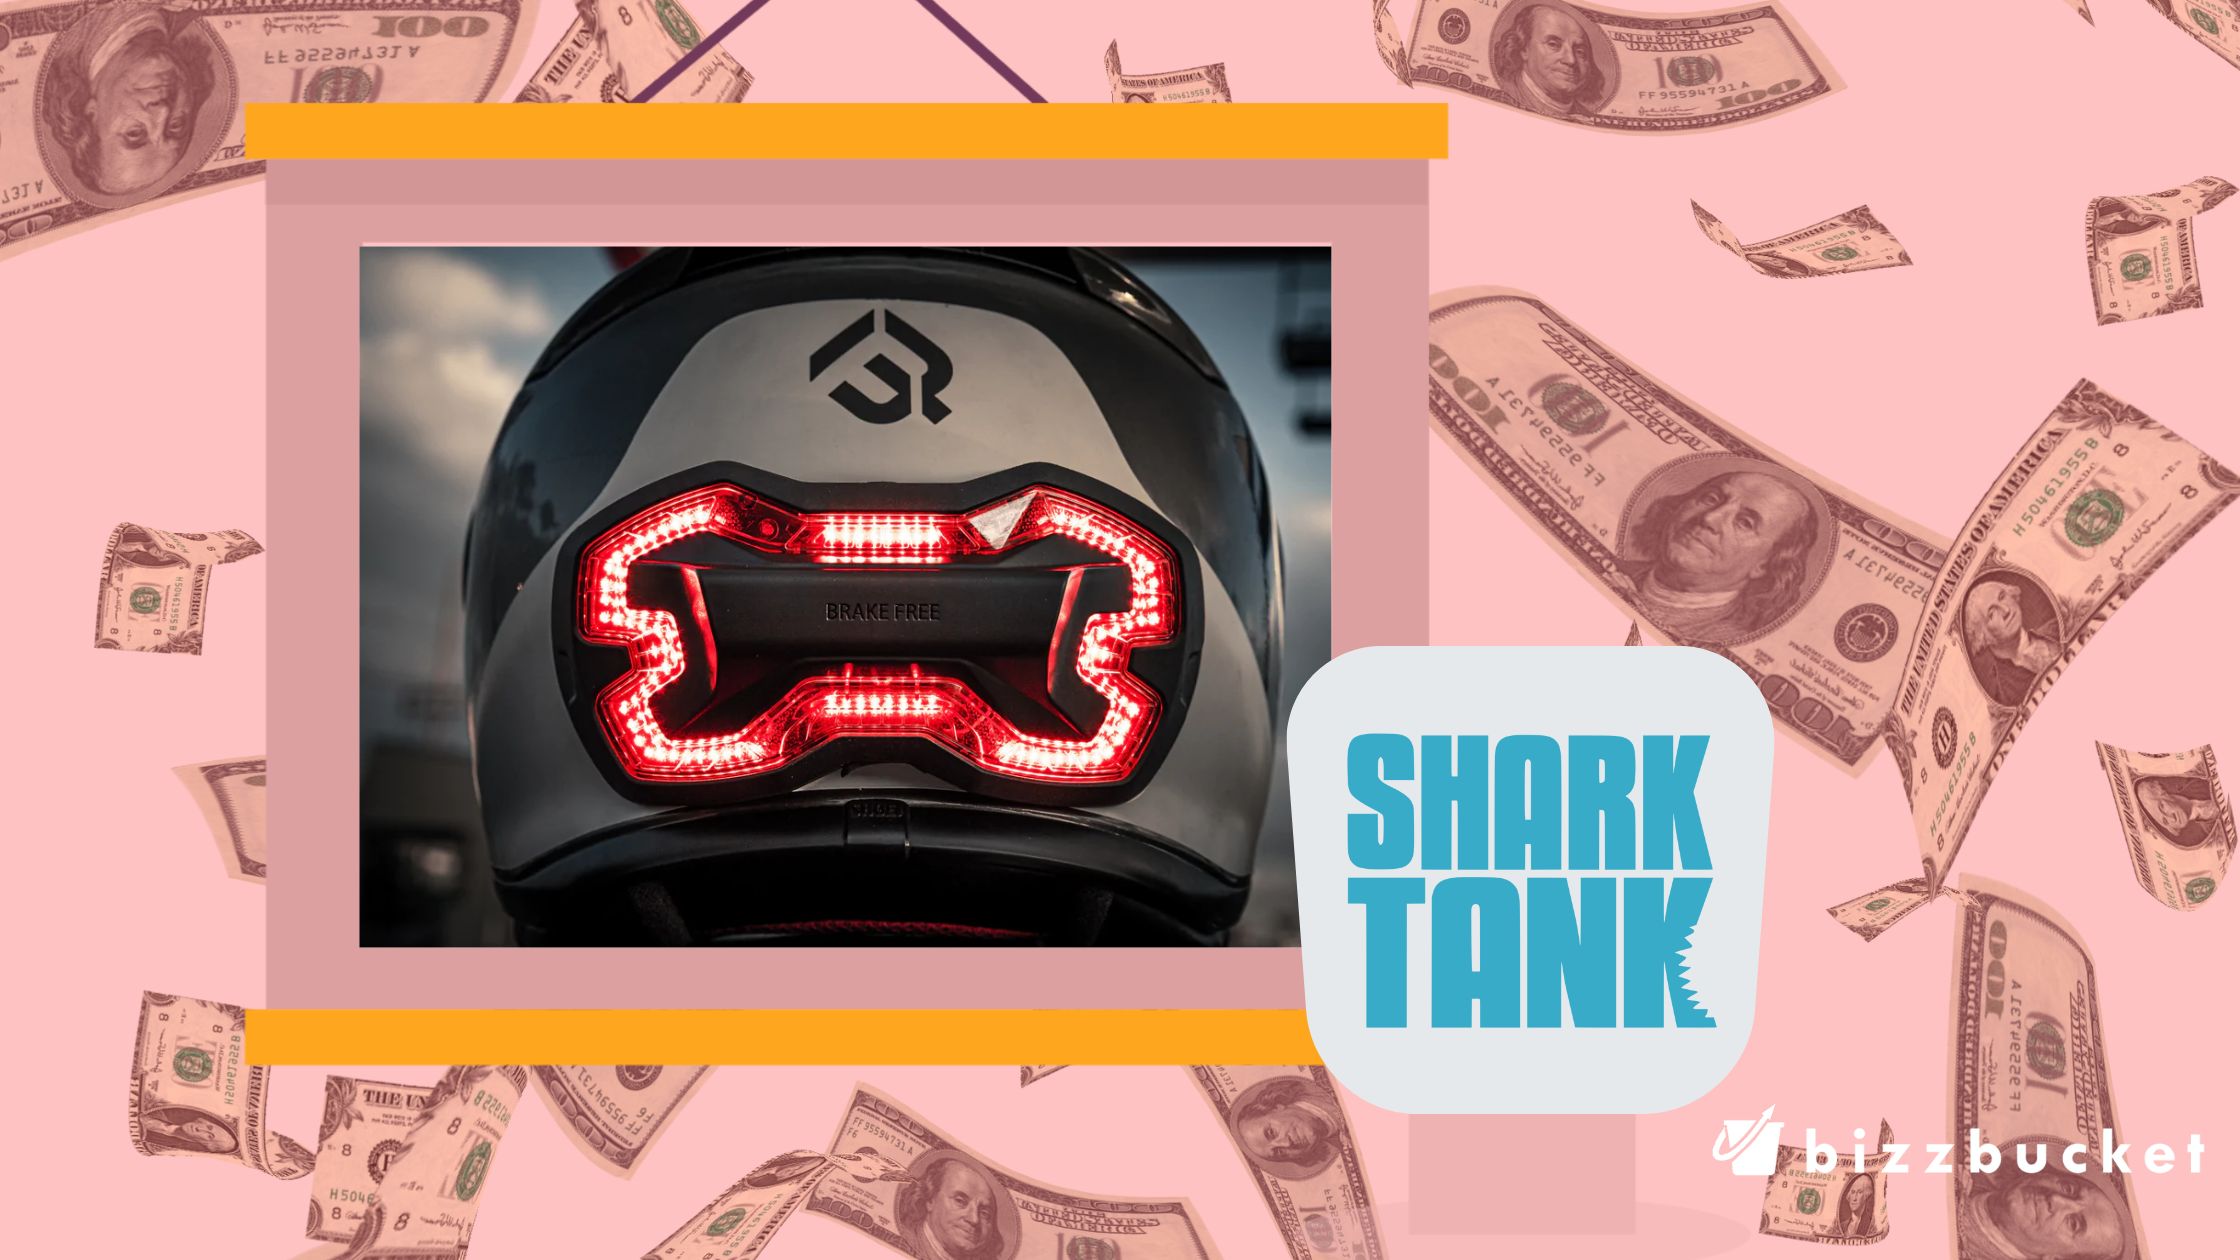 Brake Free shark tank update